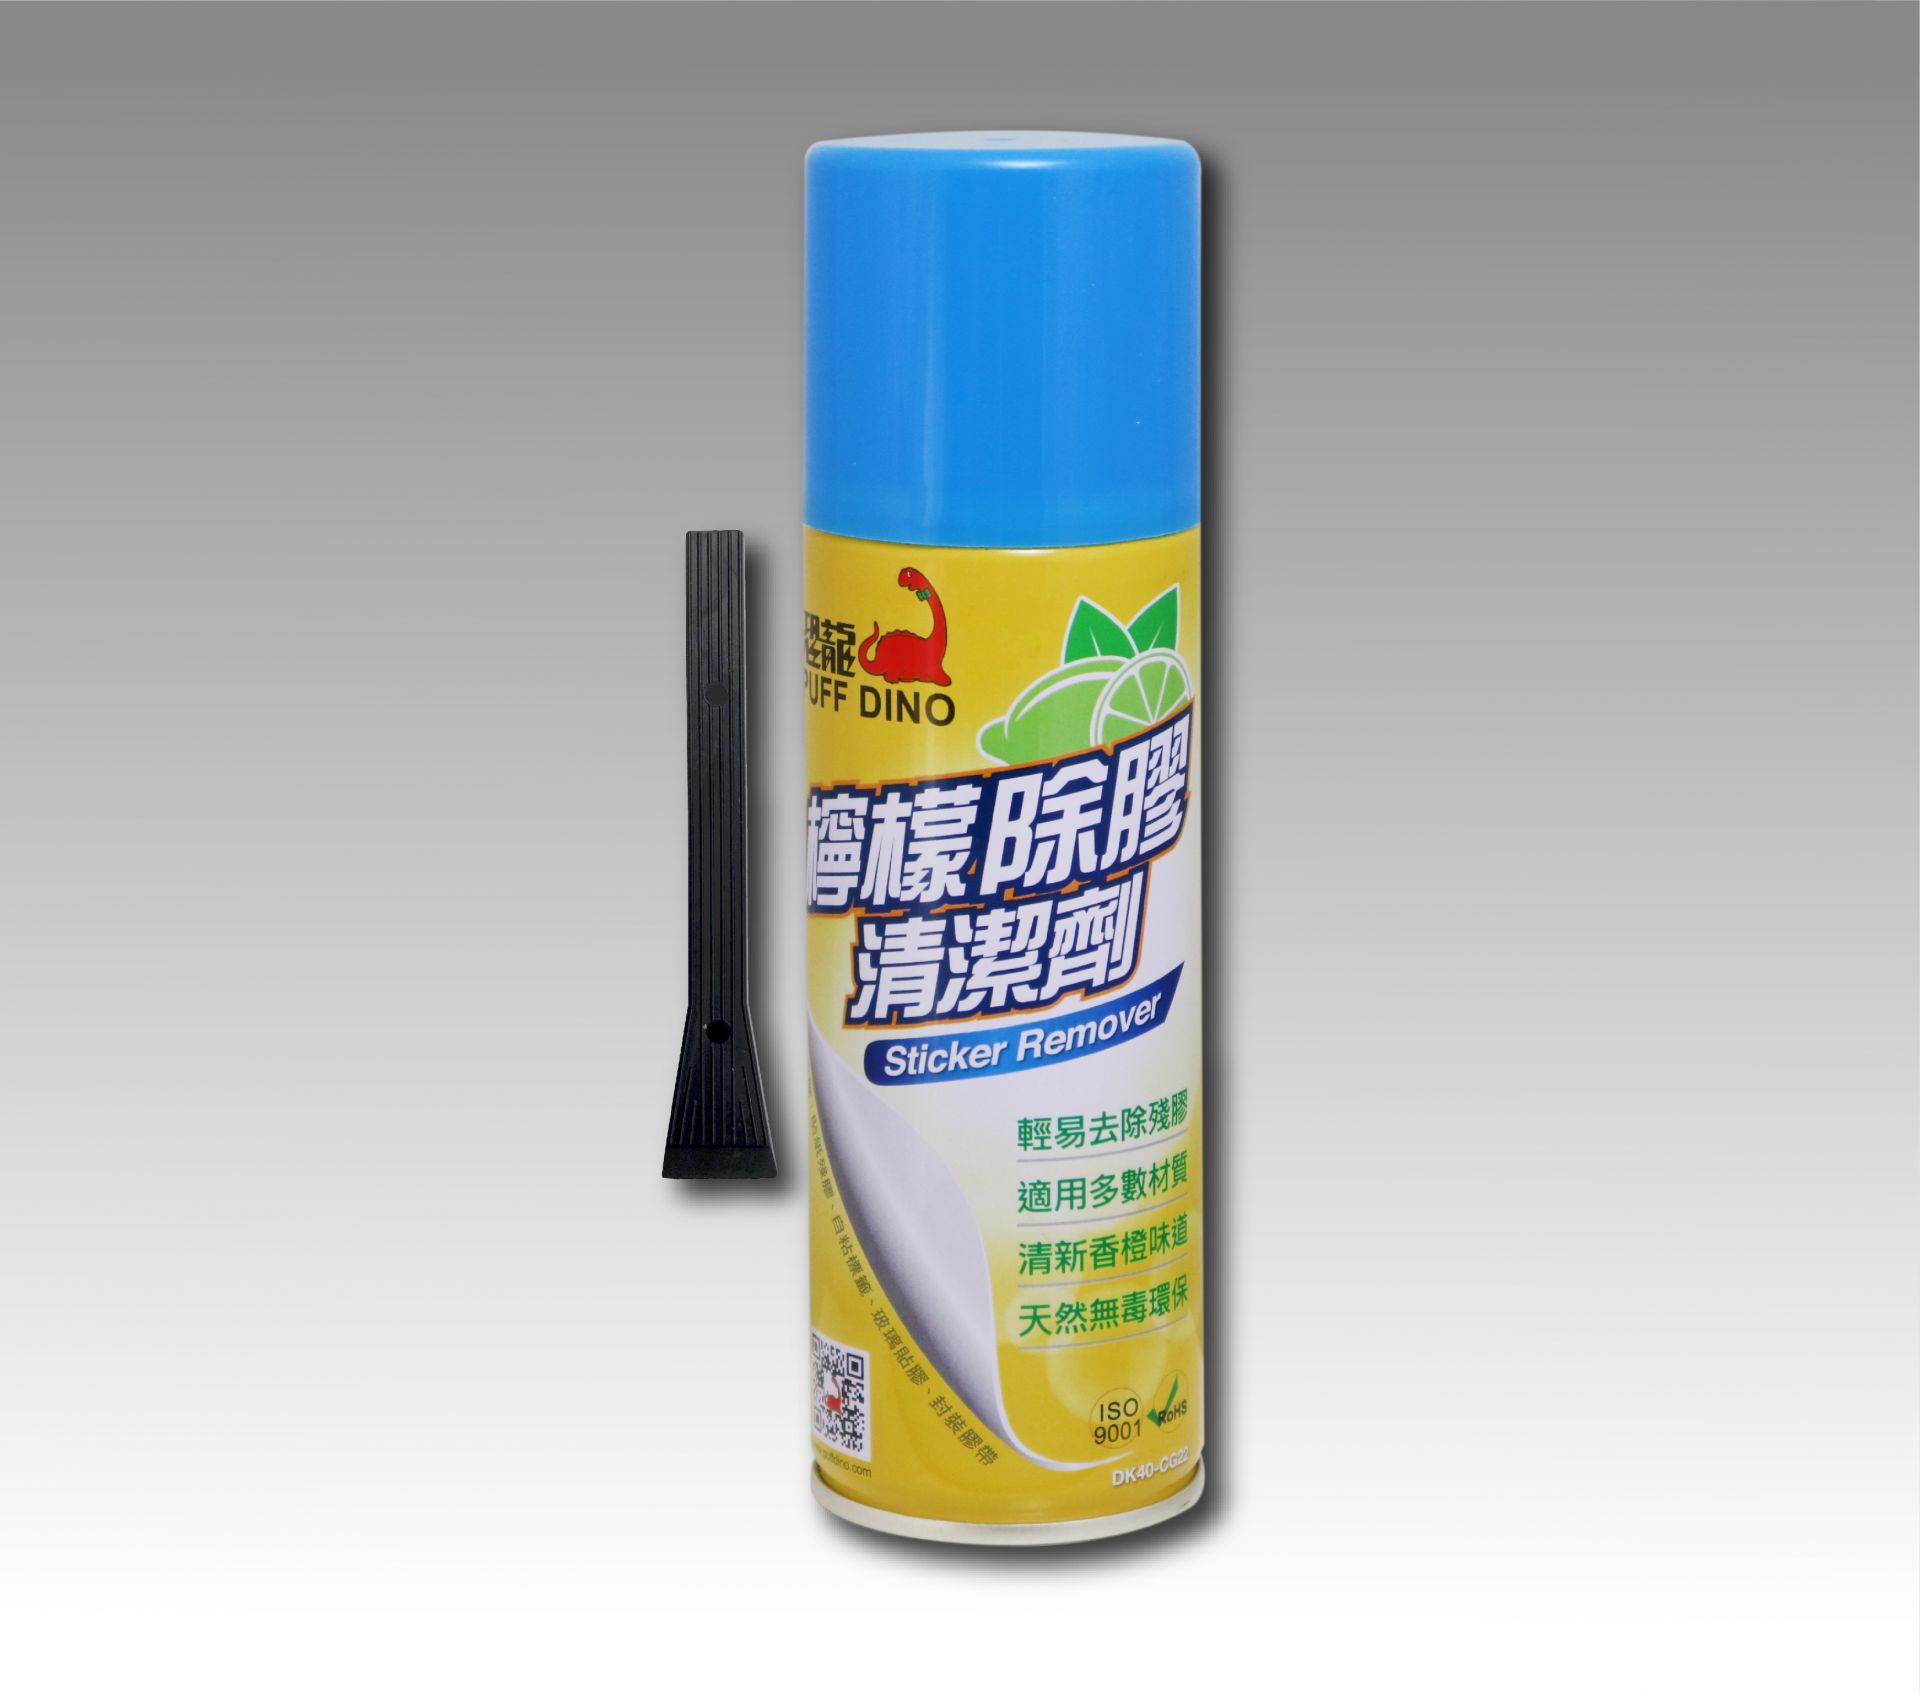 PUFF DINO Lemon Sticker Remover Spray - Lemon Sticker Remover Spray